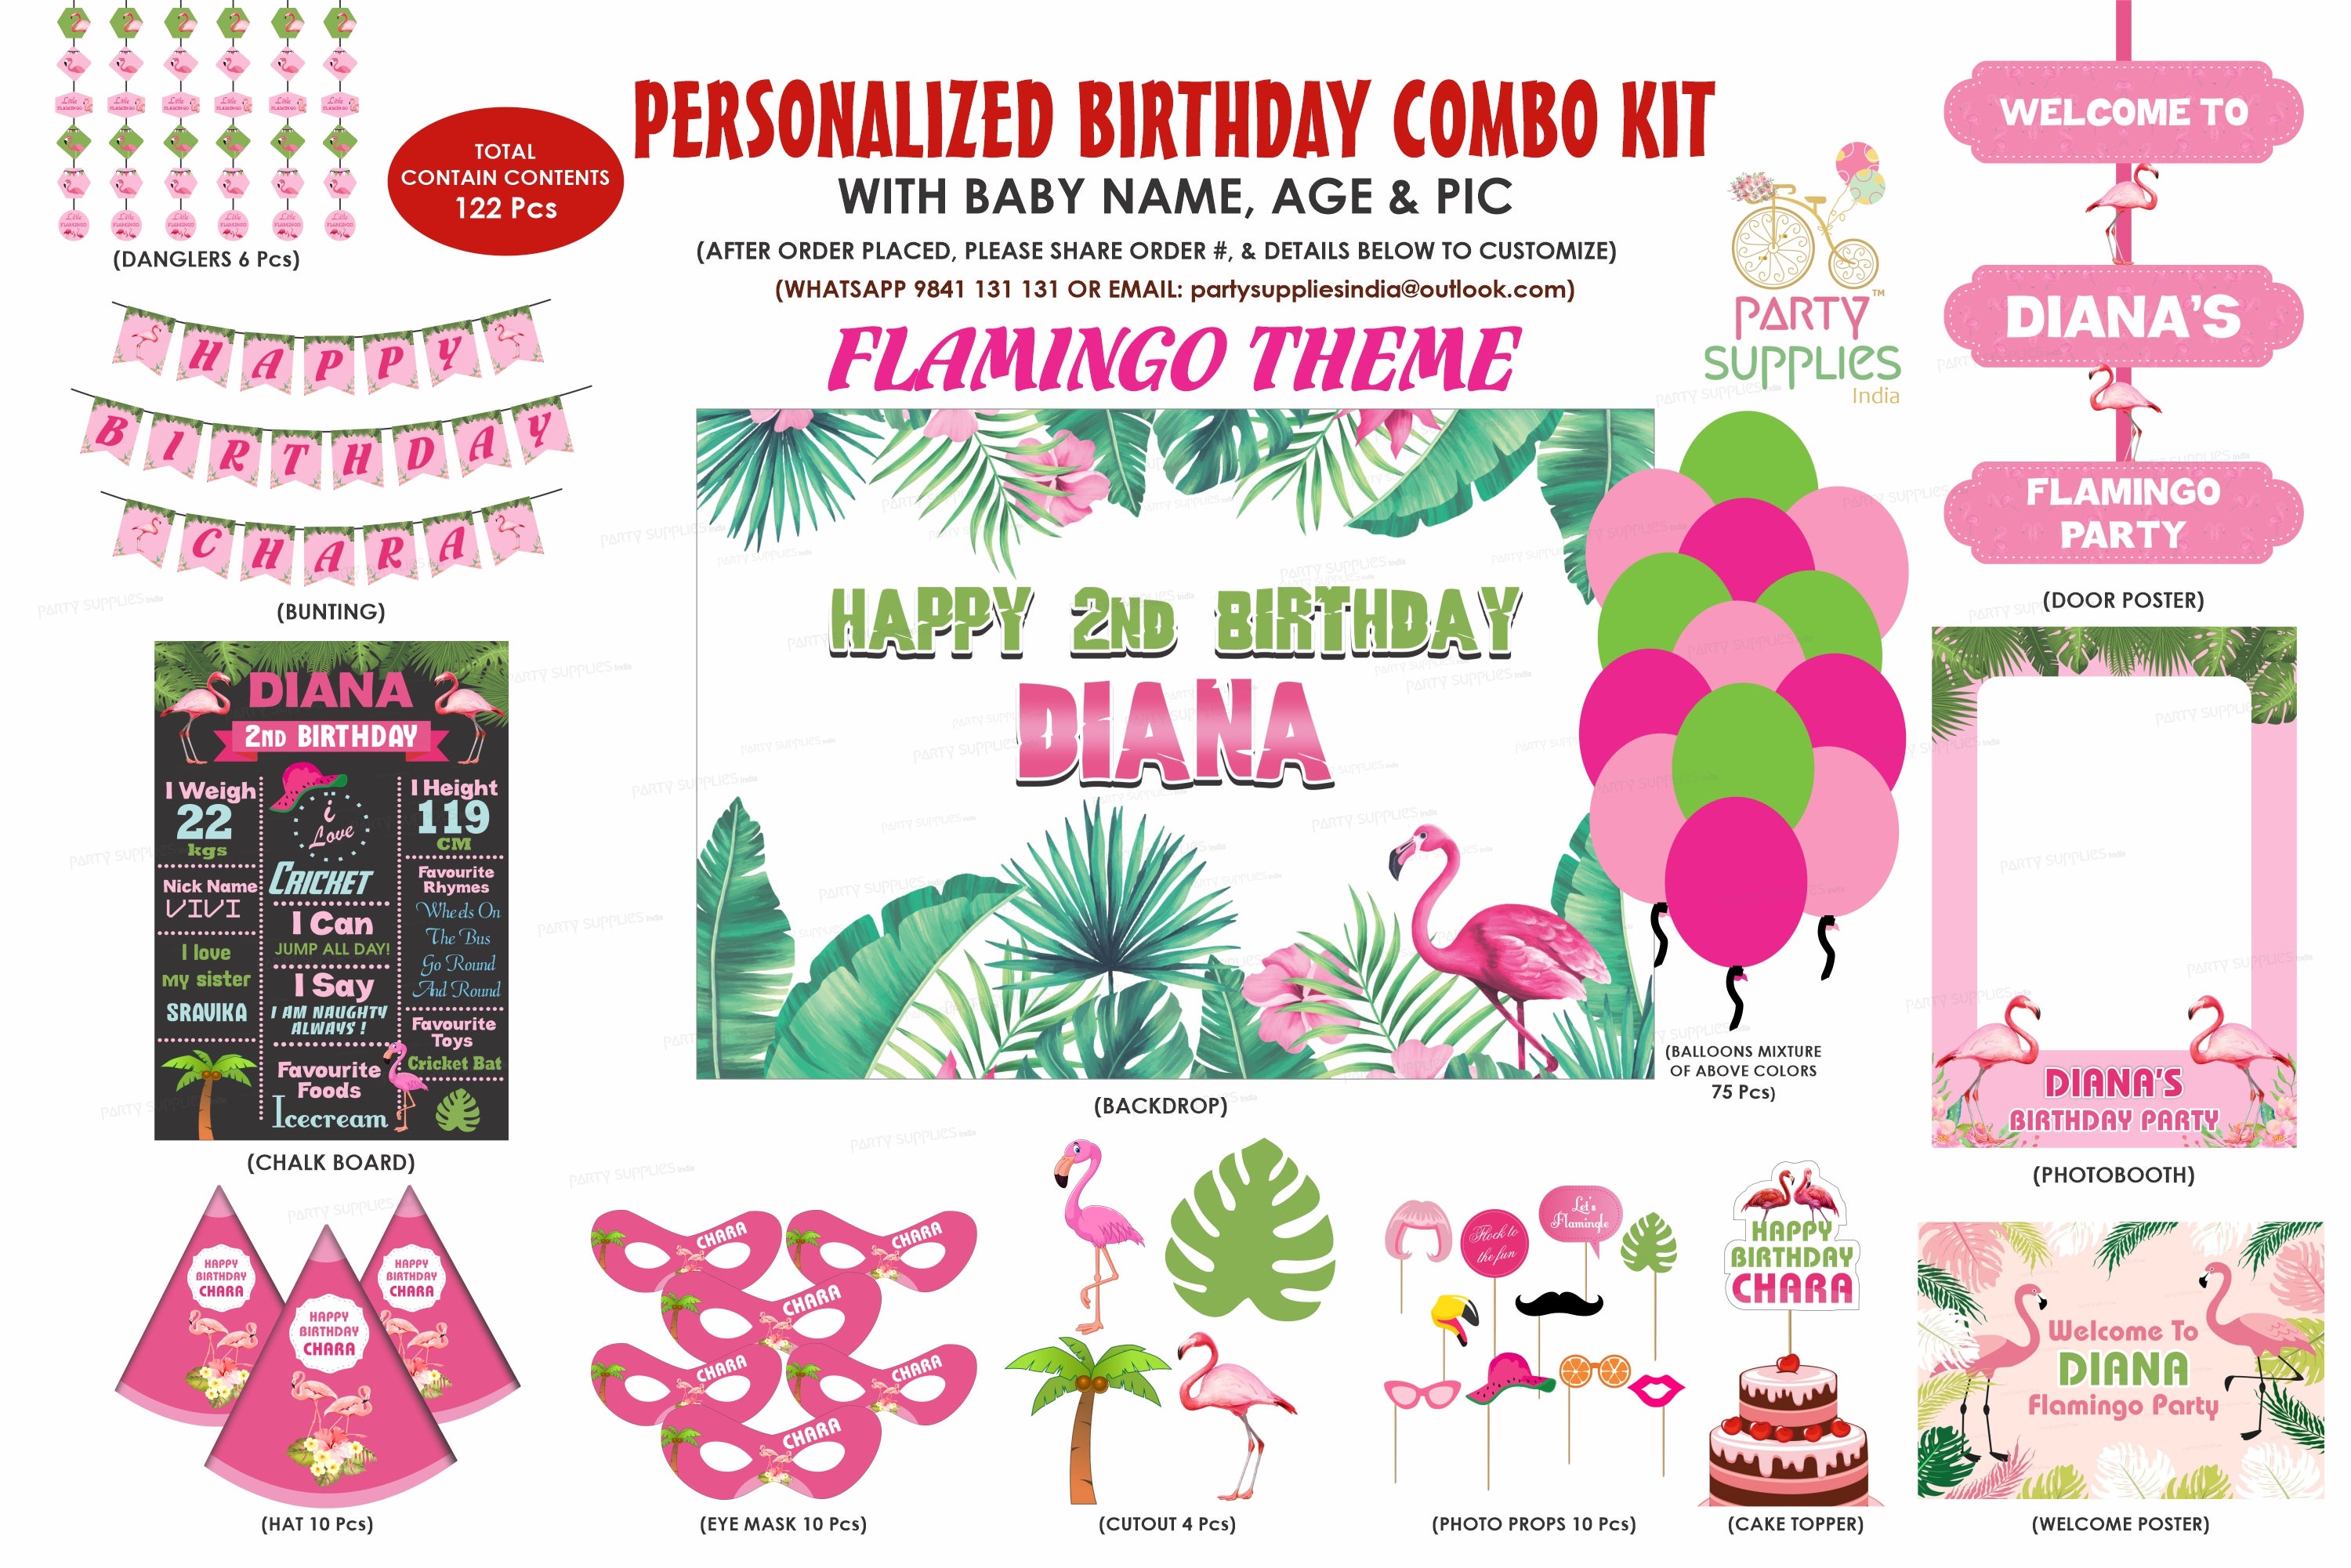 PSI Flamingo Theme Classic Kit